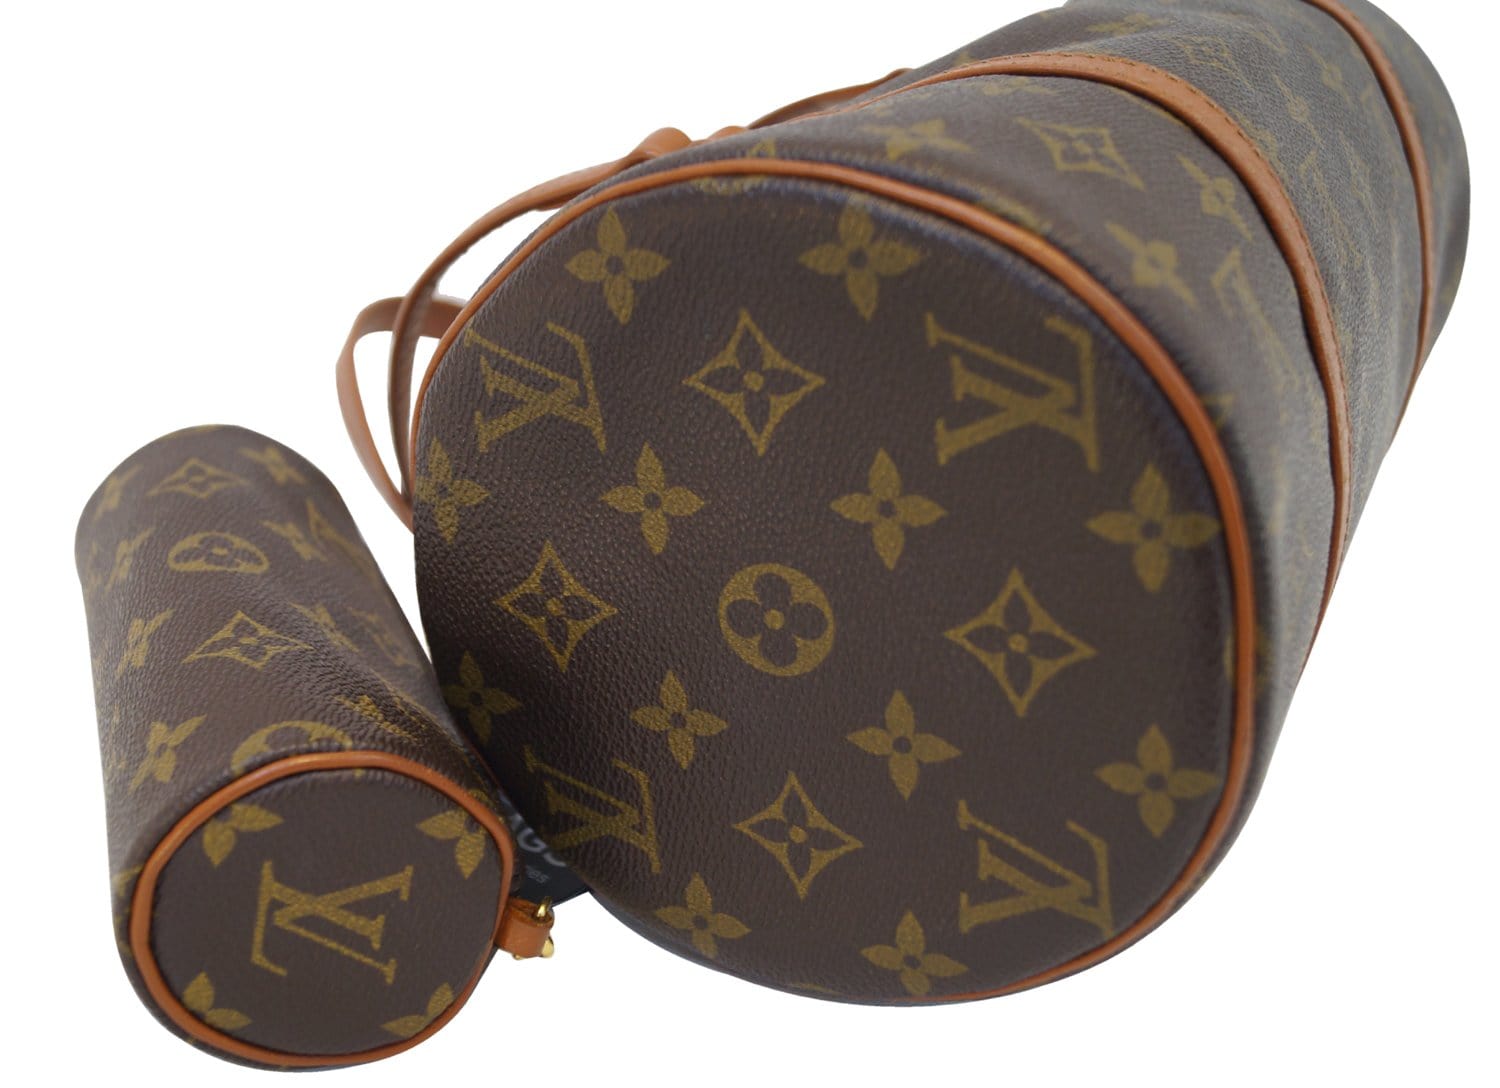 Louis Vuitton Vintage - Monogram Papillon 30 Bag - Brown - Leather Handbag  - Luxury High Quality - Avvenice